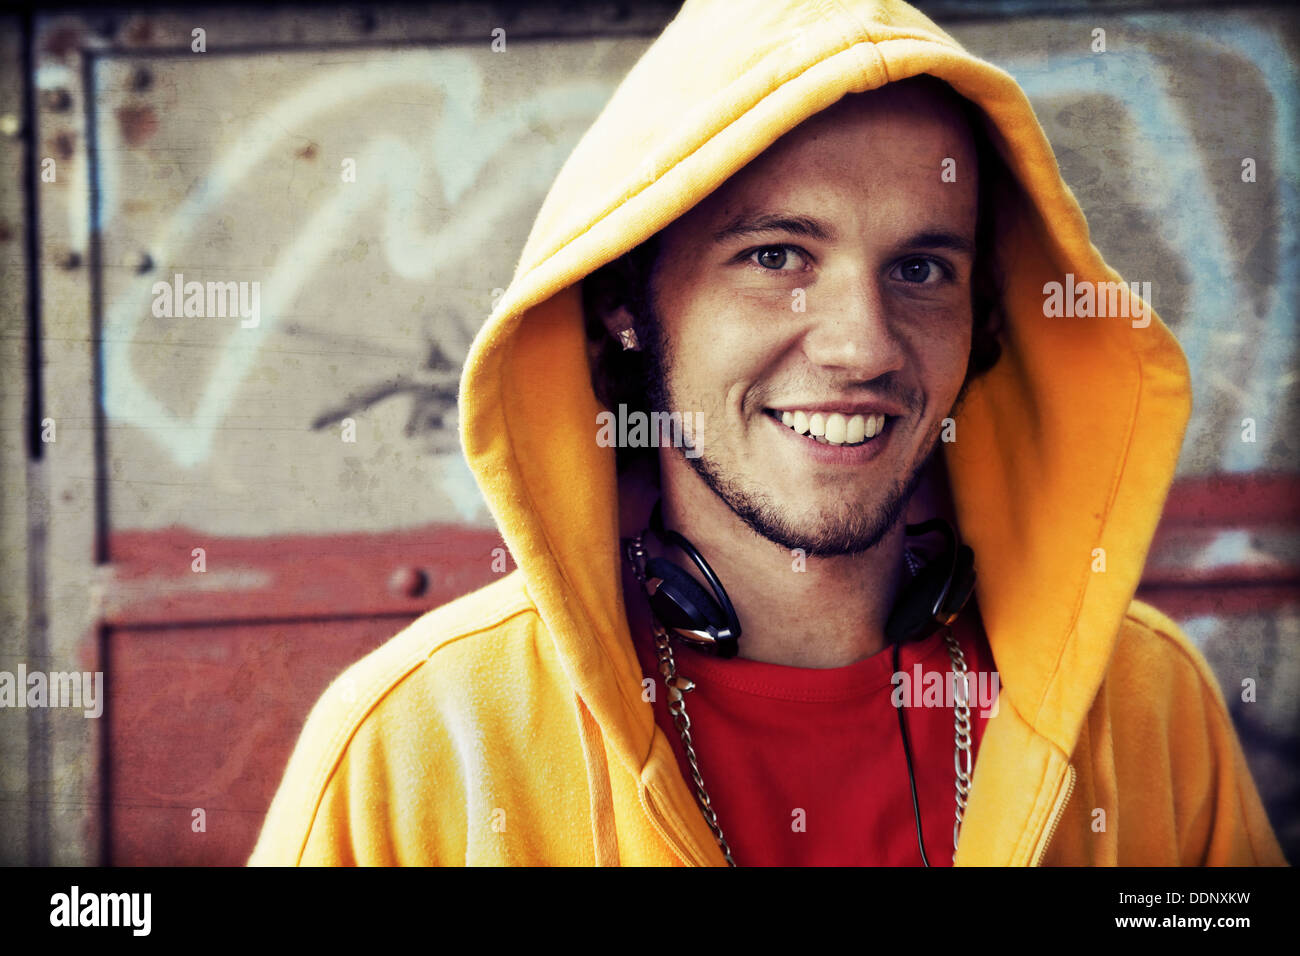 Teen / Young man portrait in hooded sweatshirt / jumper on grunge graffiti wall Stock Photo